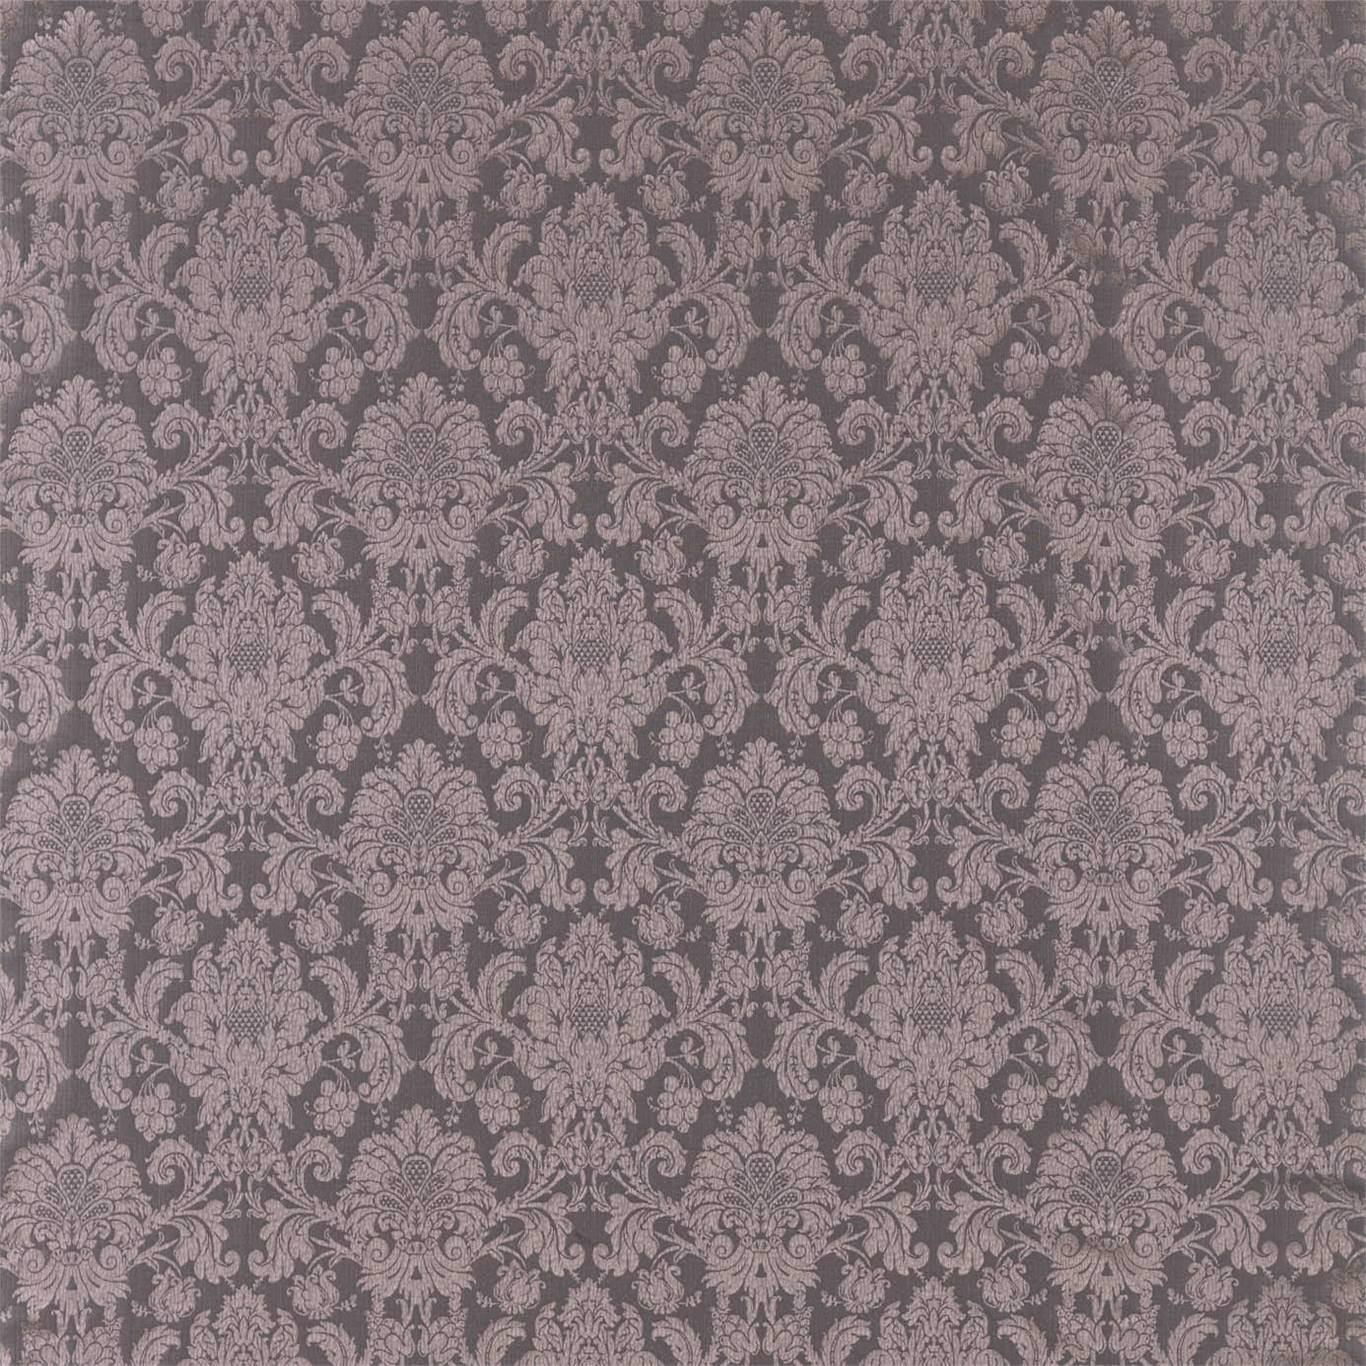 Crivelli Weave Rose Quartz Fabric by ZOF